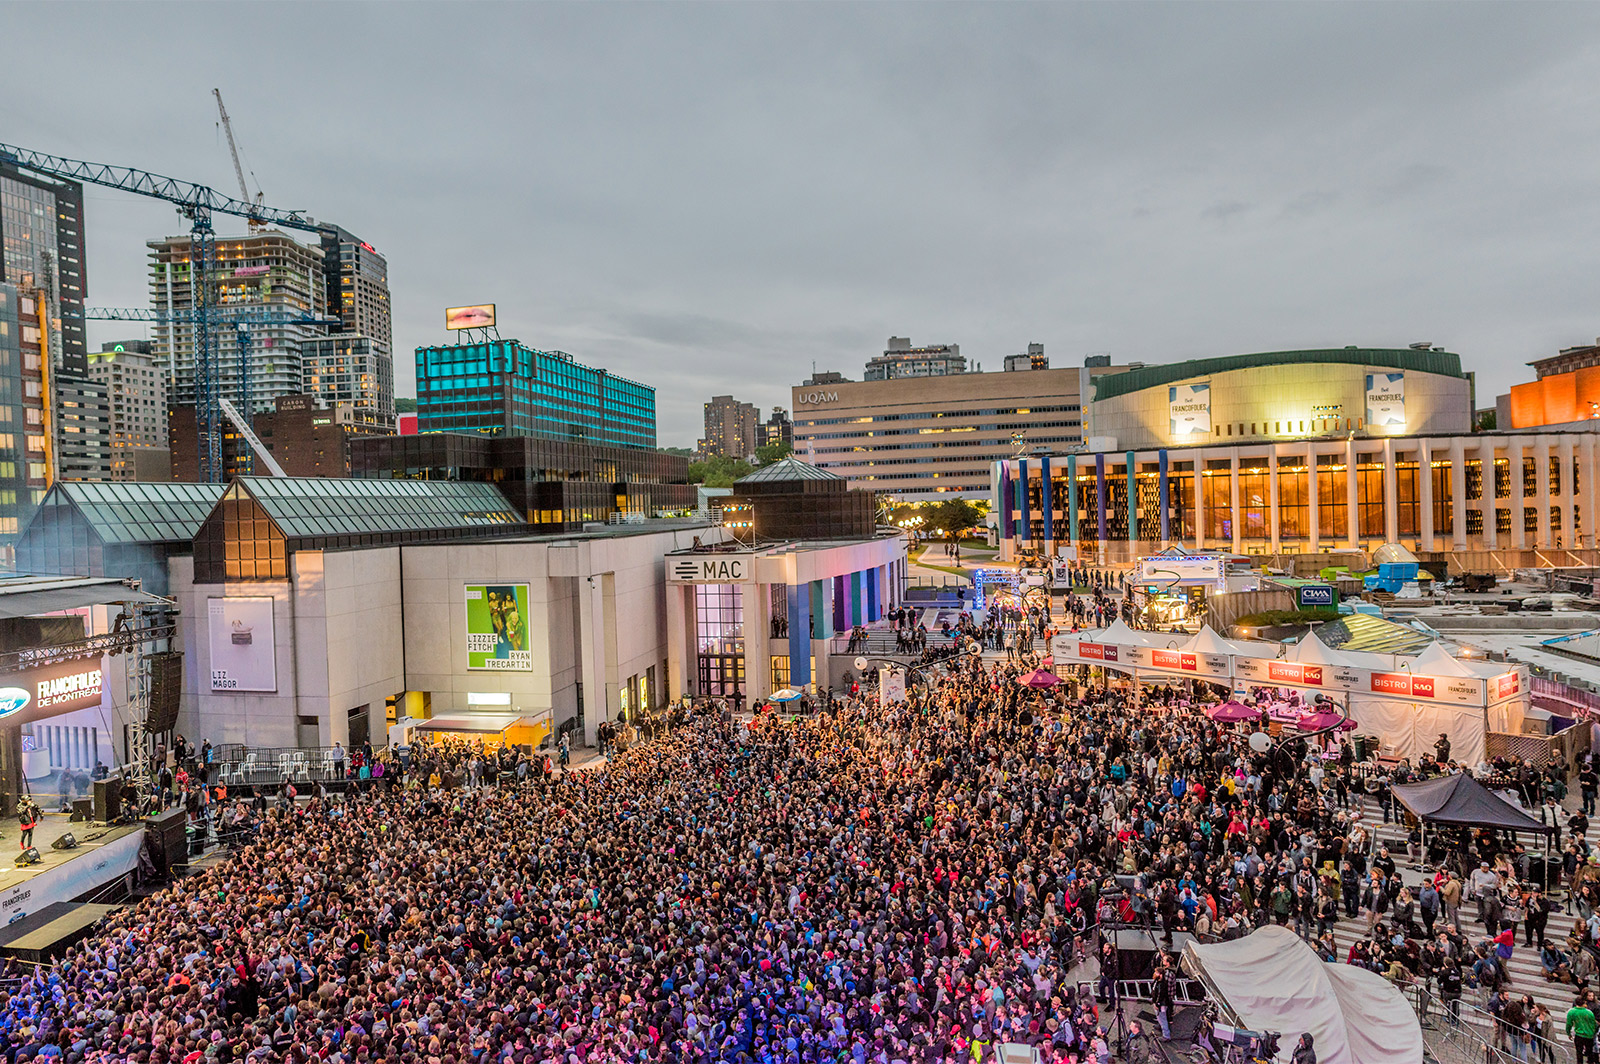 Montréal festivals and events for everyone